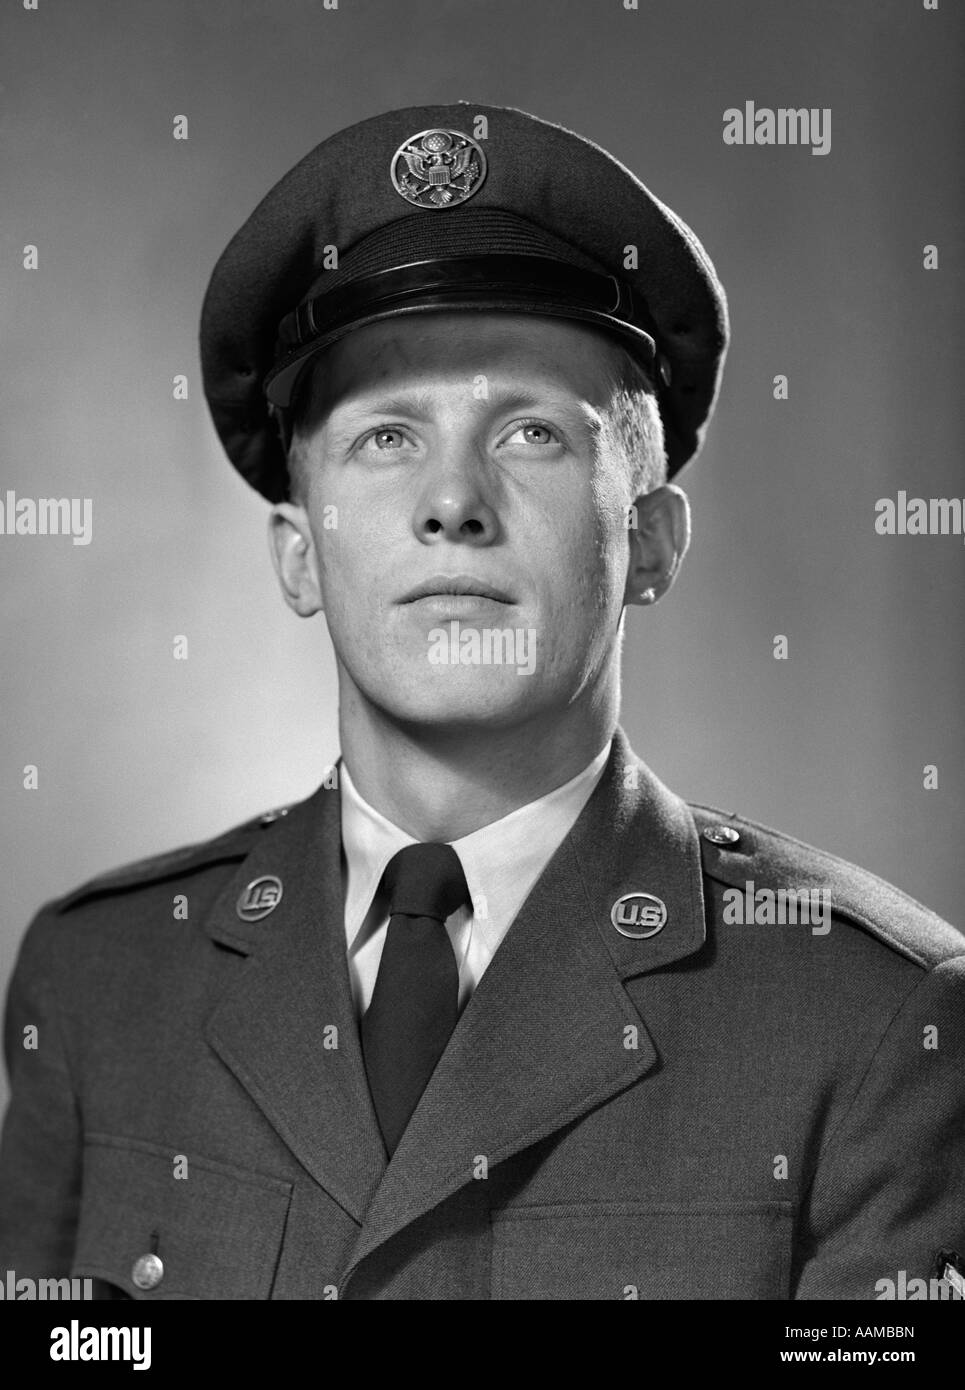 1950s PORTRAIT U.S. ARMY SOLDIER HEAD SHOULDERS MAN Stock Photo